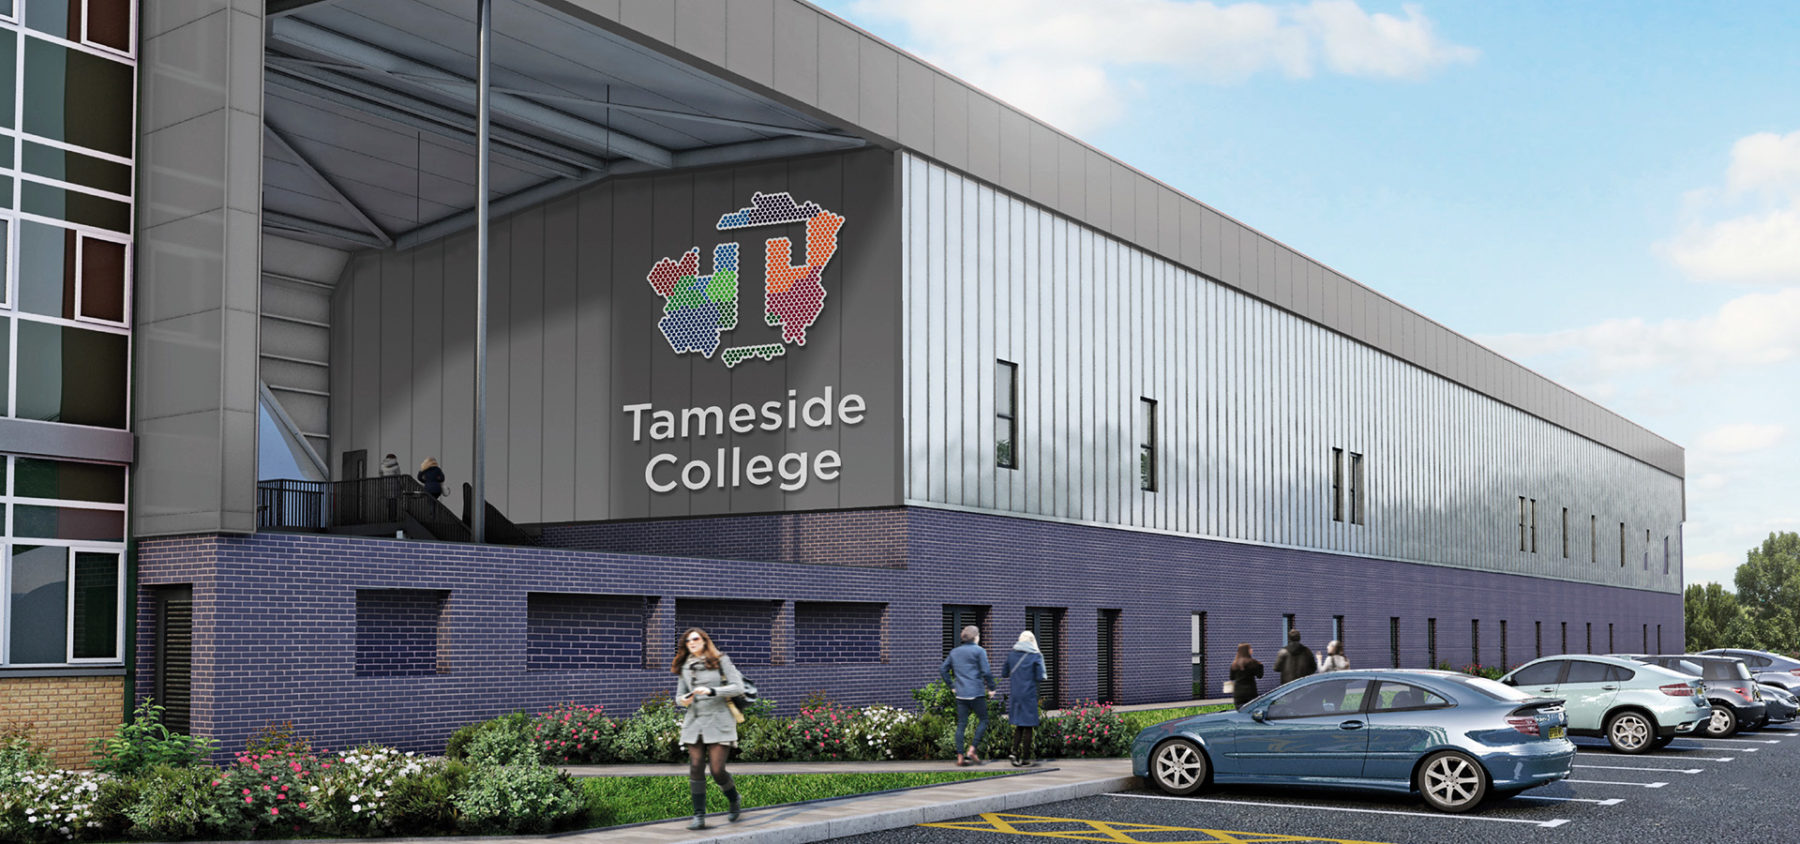 Tameside College sign visual